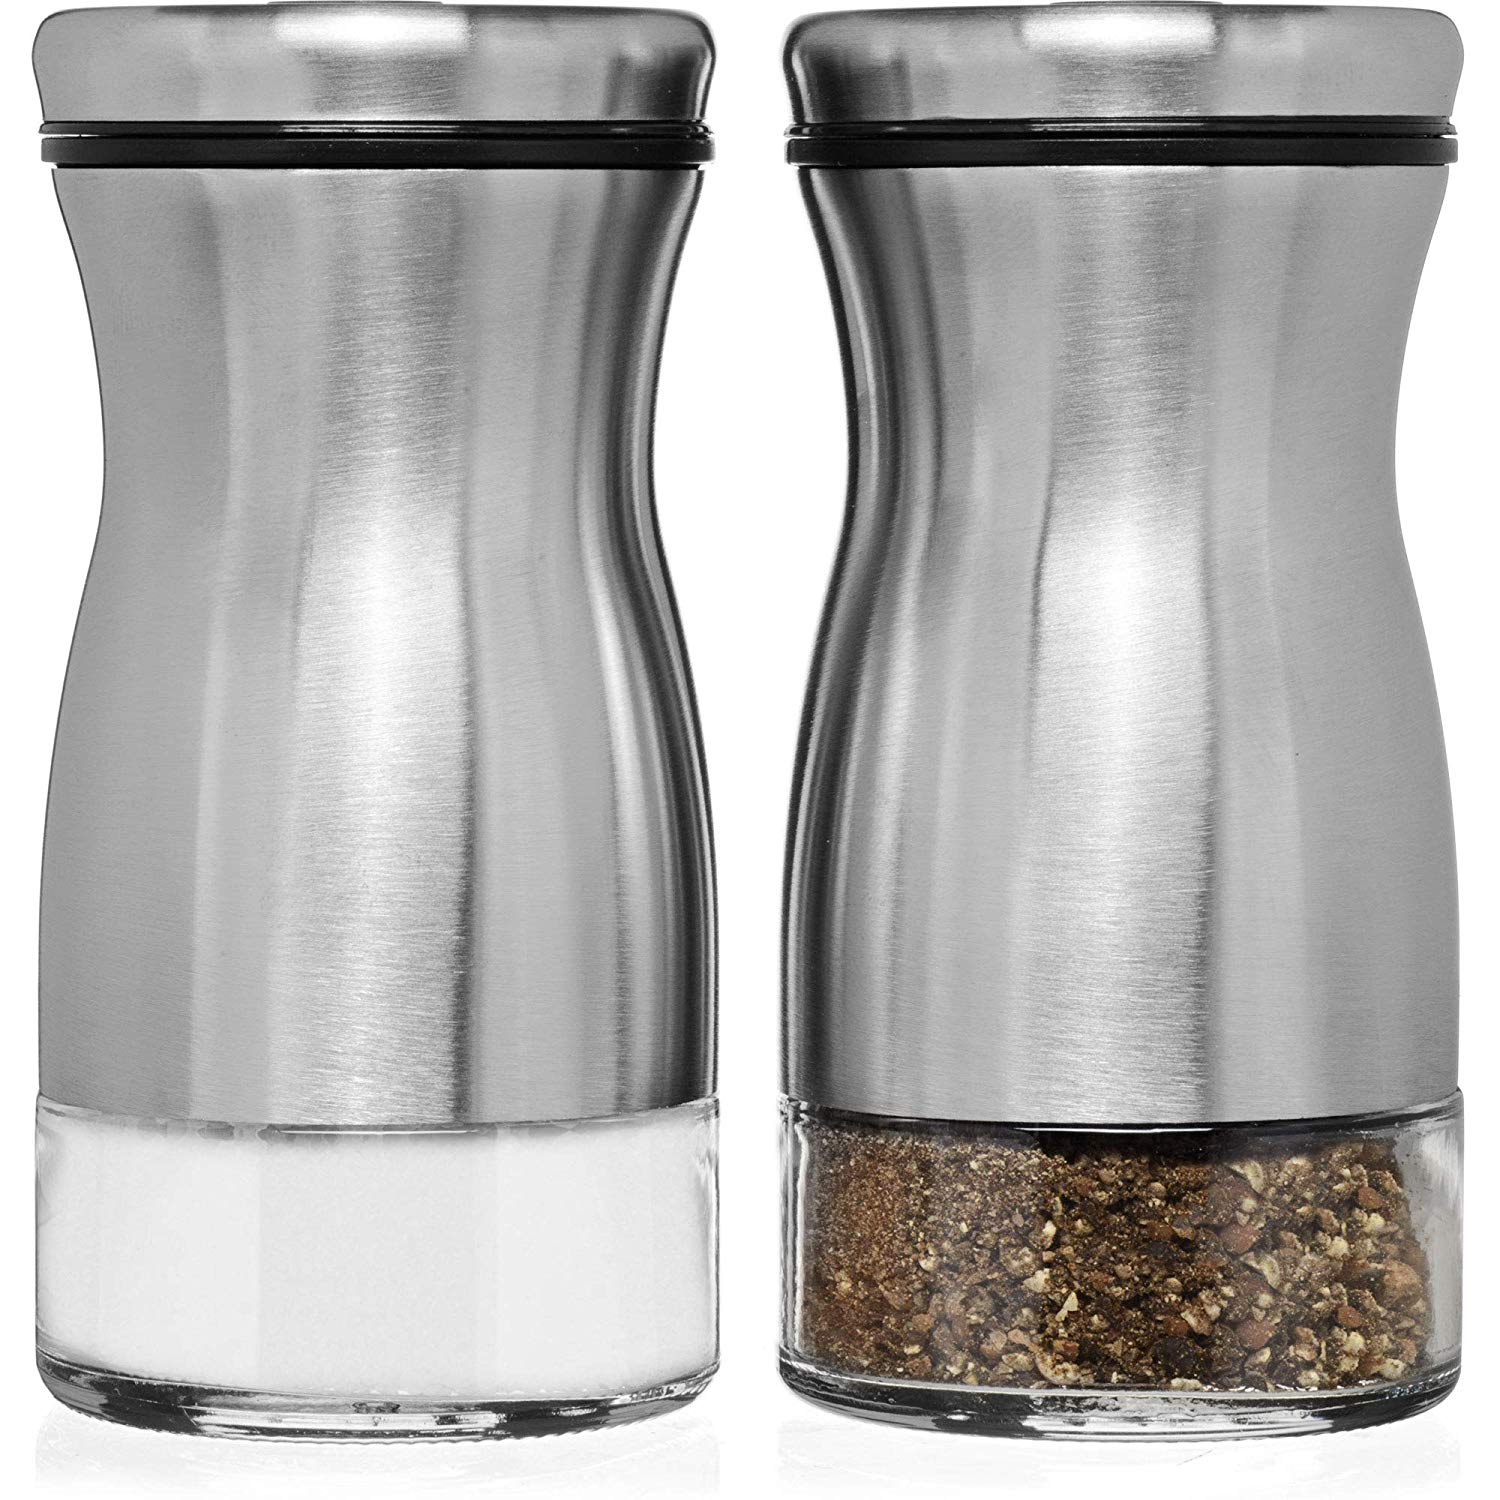 CHEFVANTAGE Salt and Pepper Shakers Set